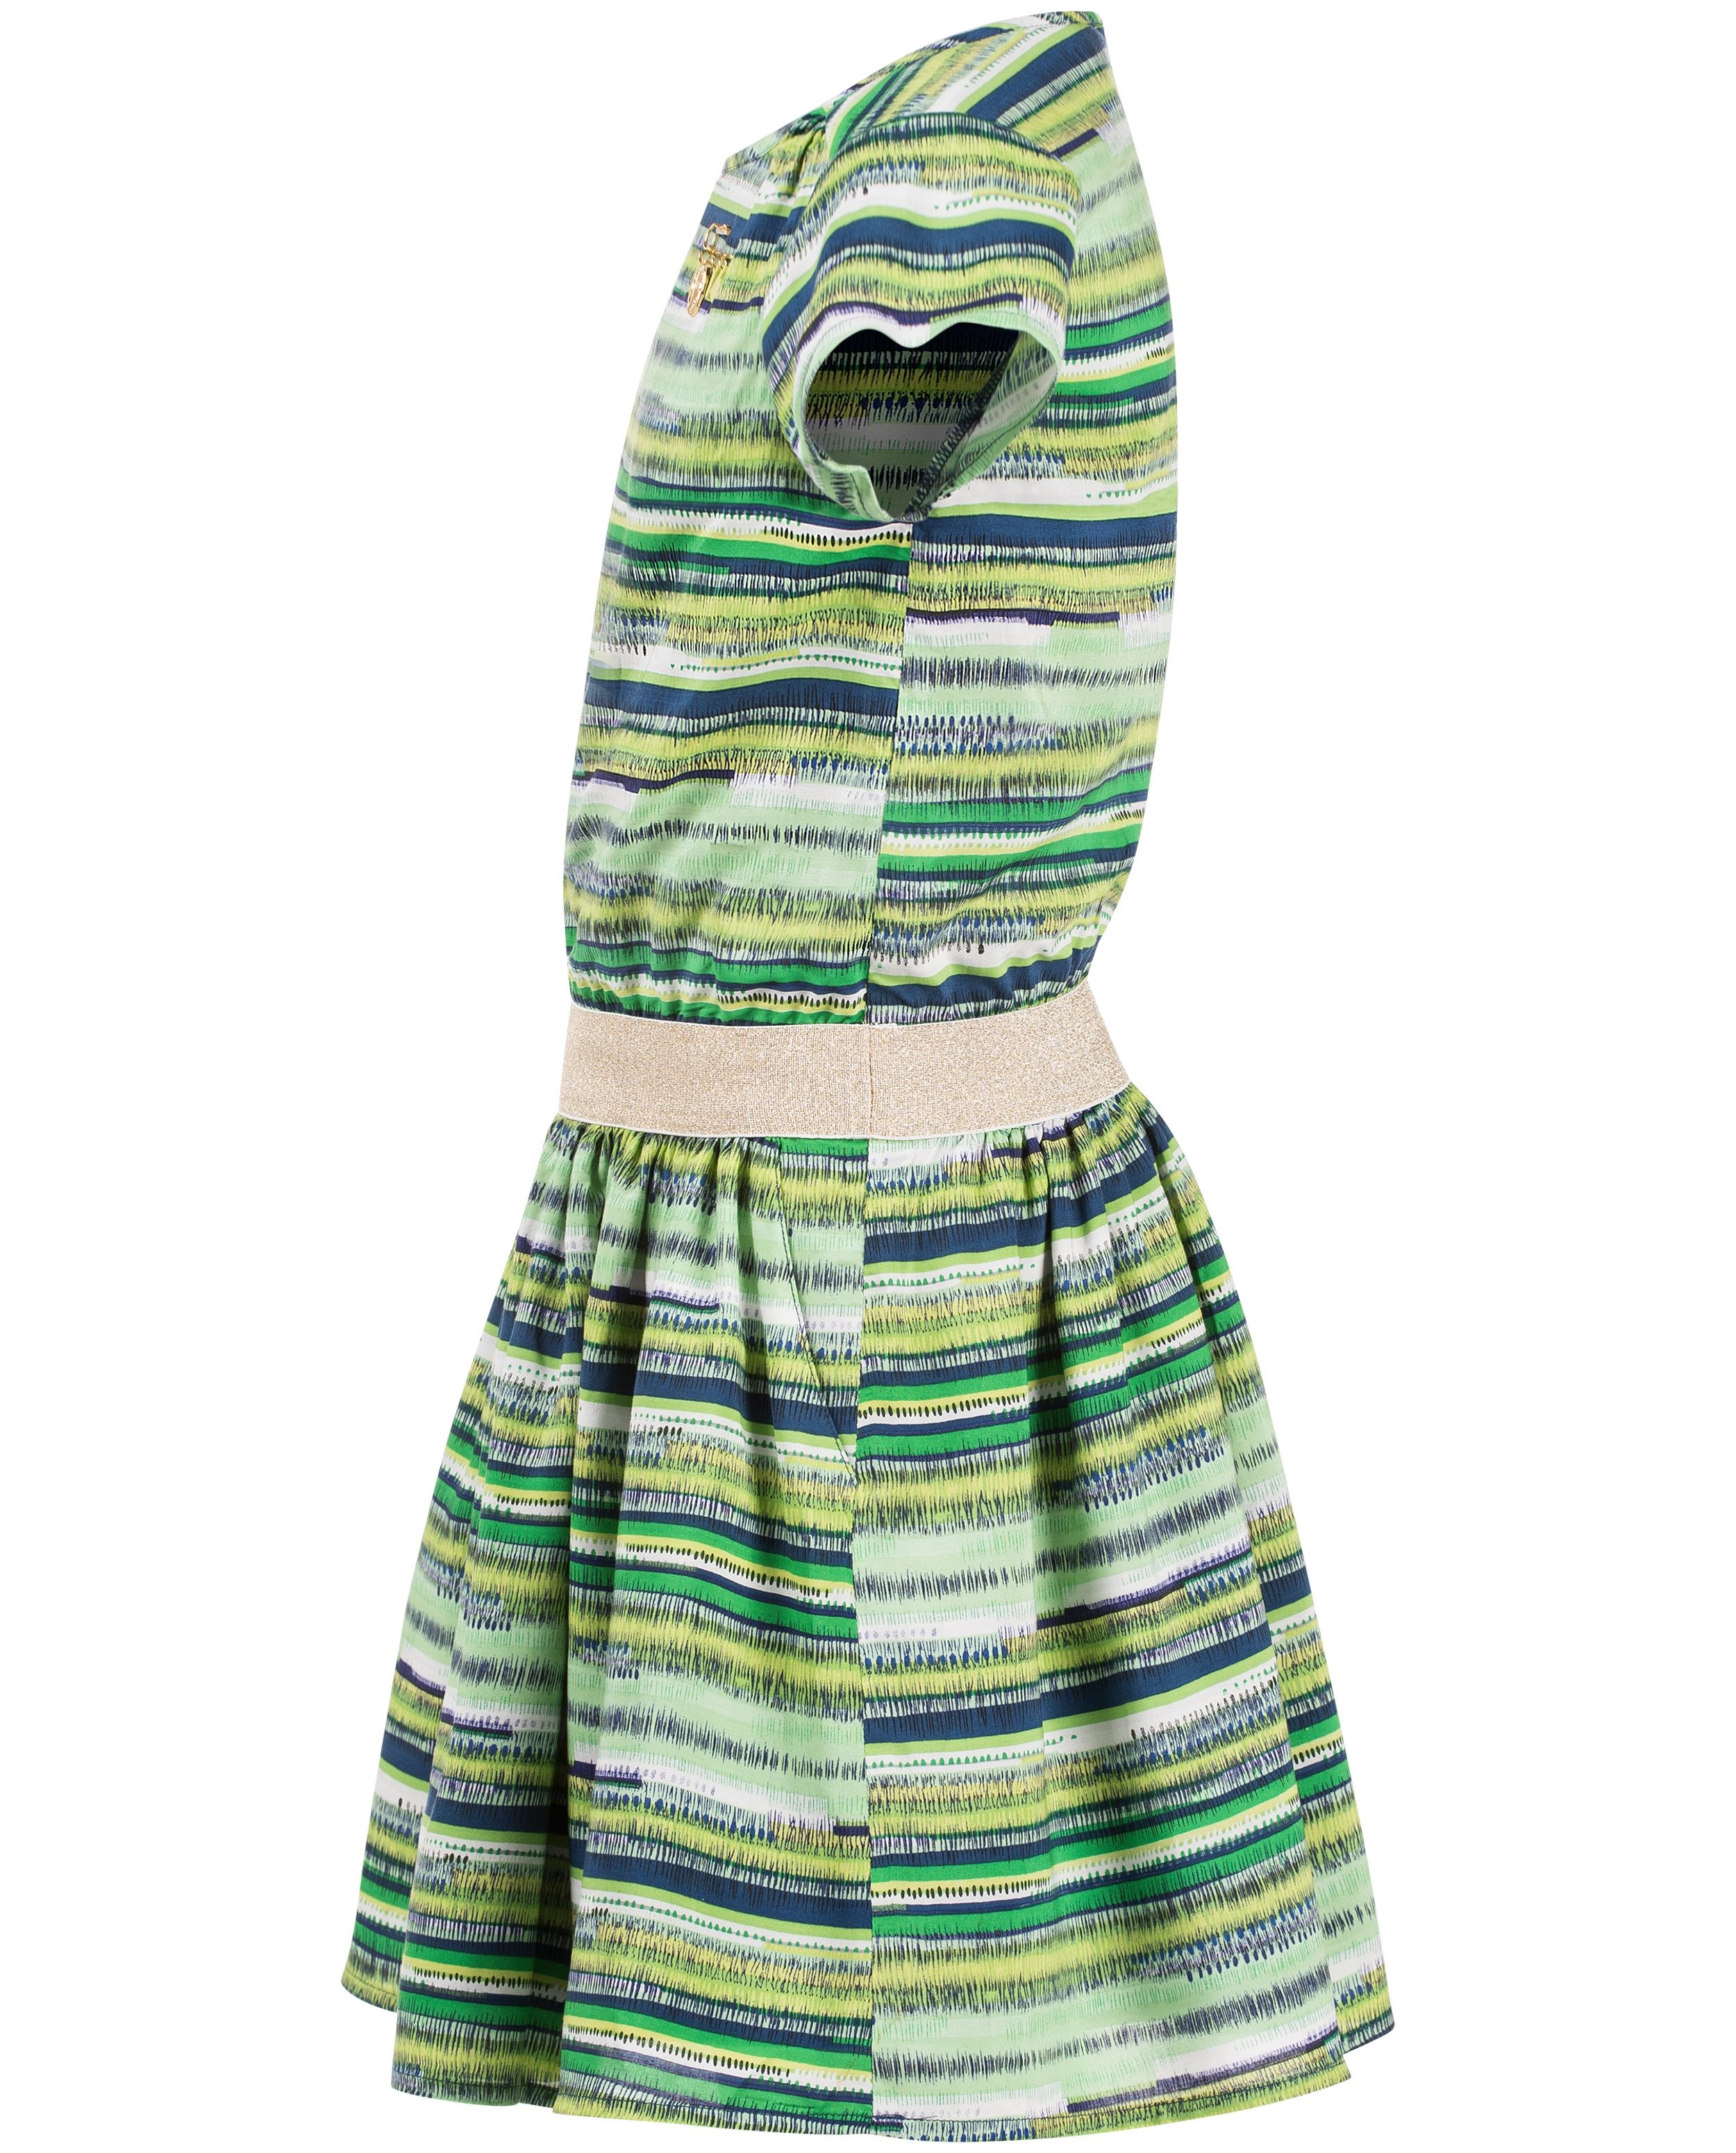 Kleedjes - Groene gestreepte jurk